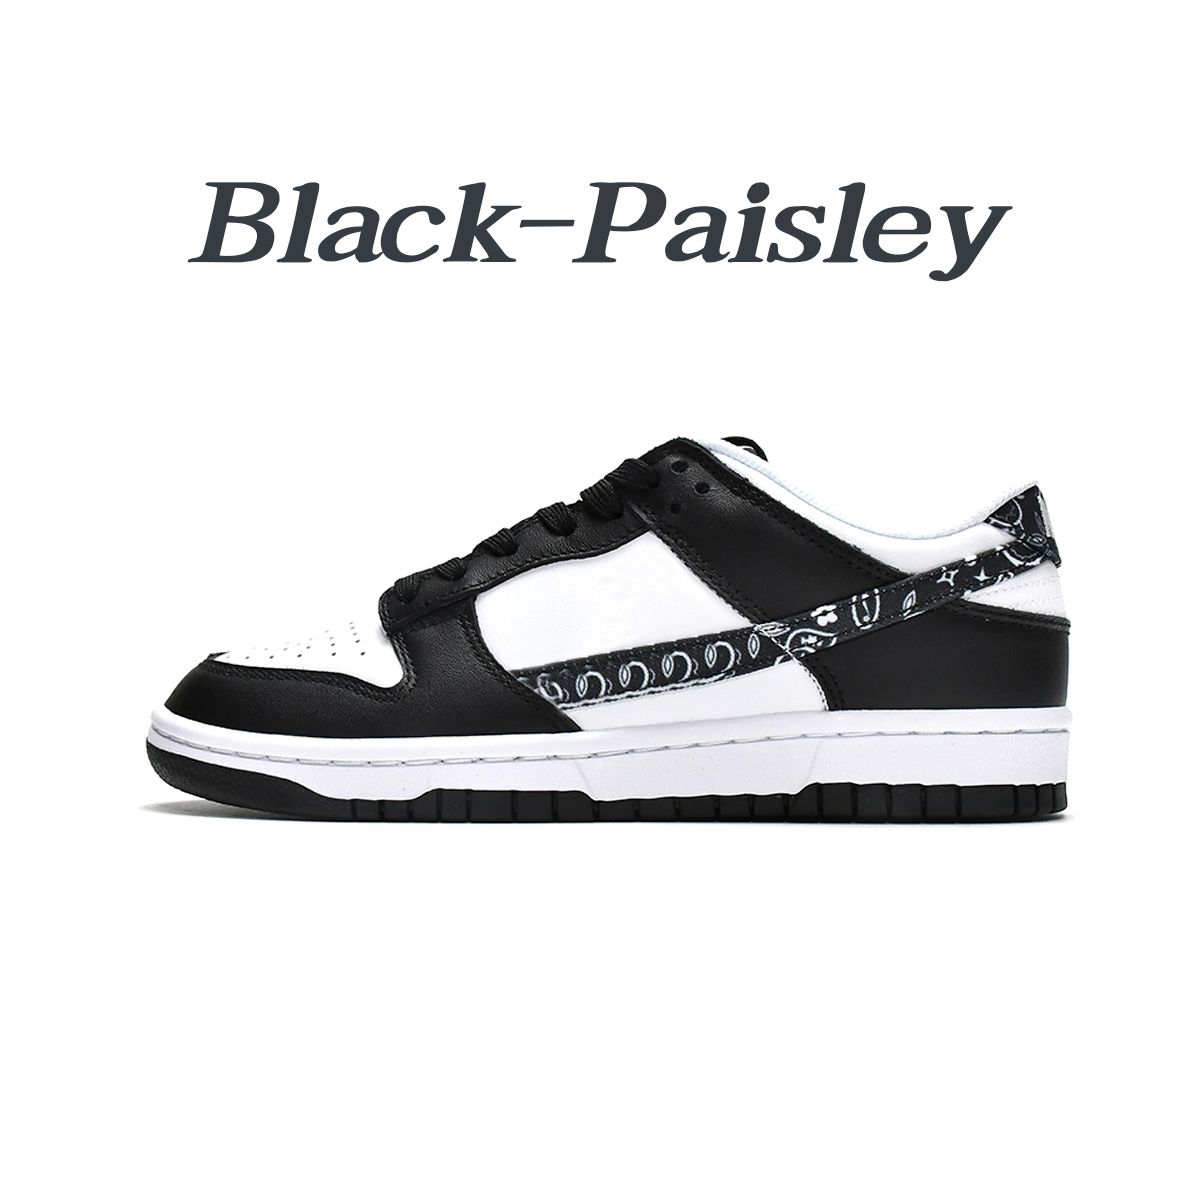 2. Black-Paisley